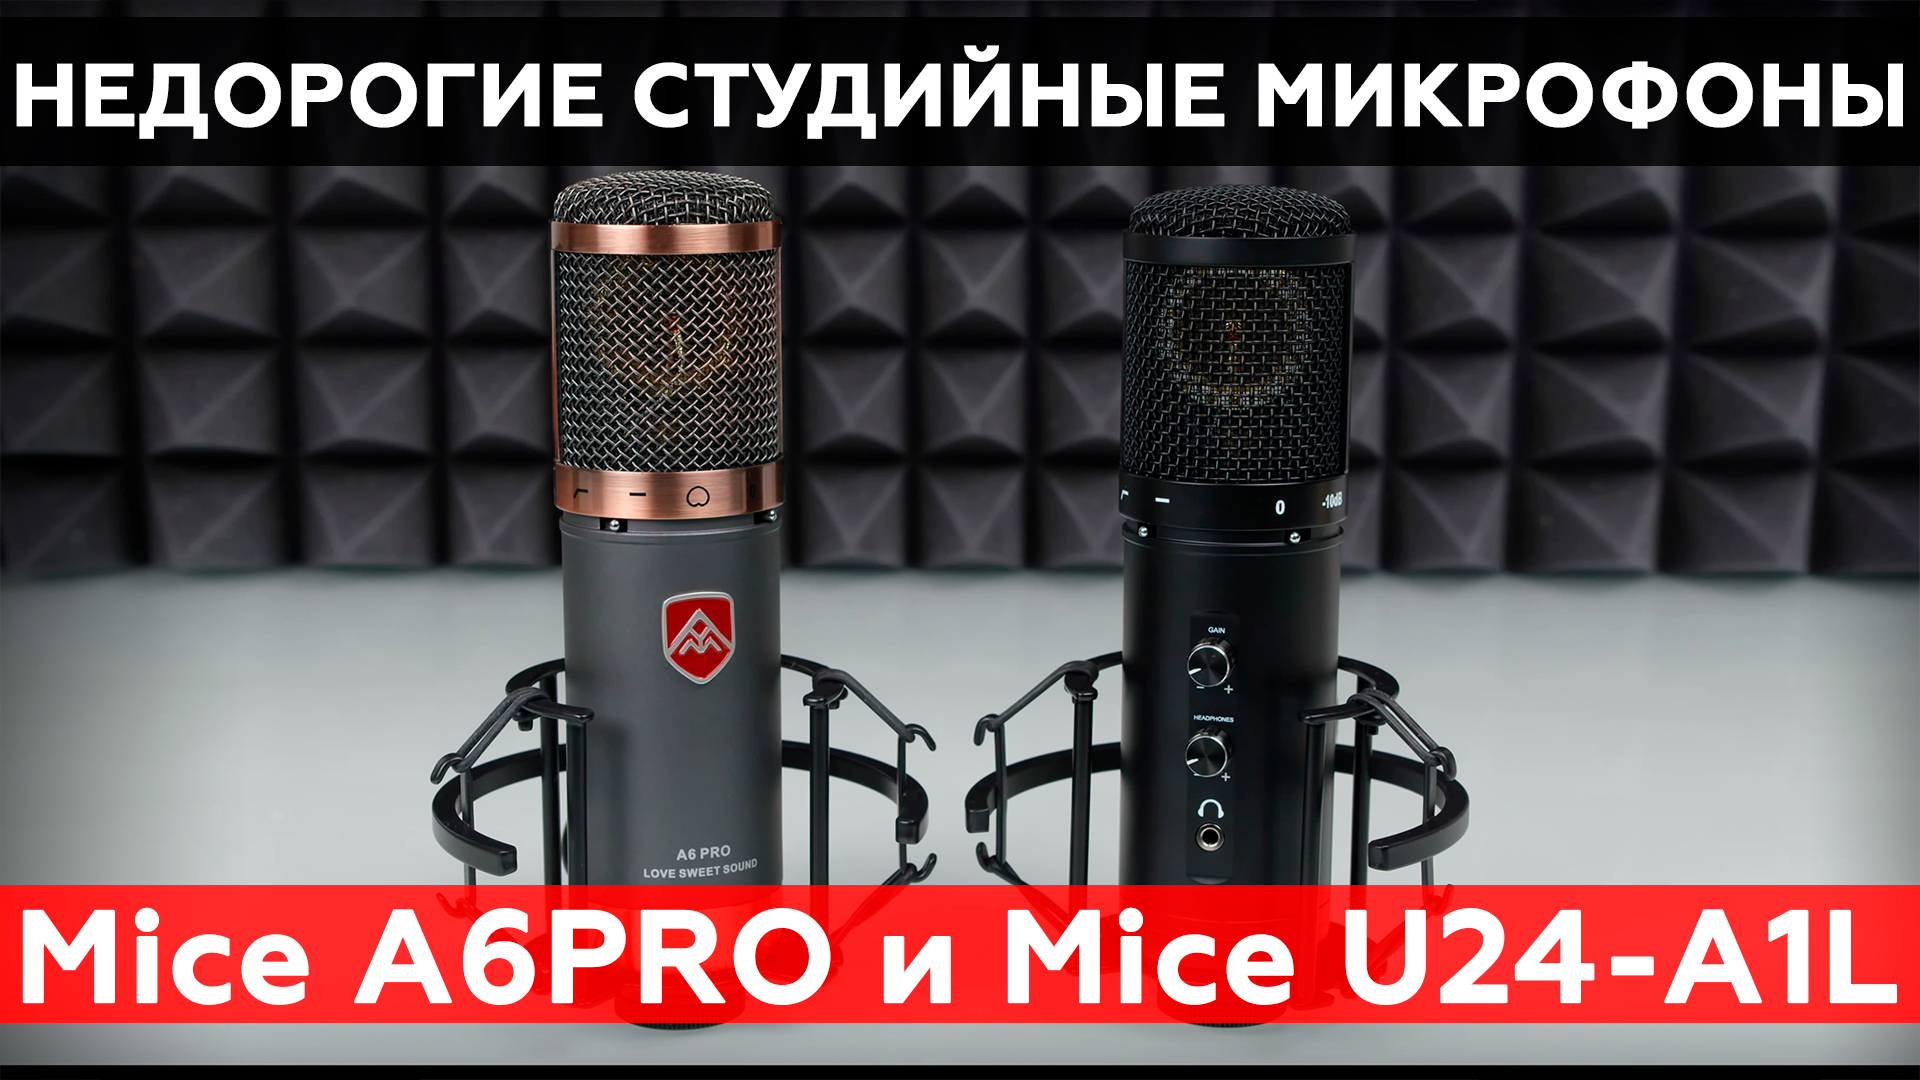 Mice A6PRO и Mice U24-A1L – микрофоны для звукозаписи с большим капсюлем 34 мм